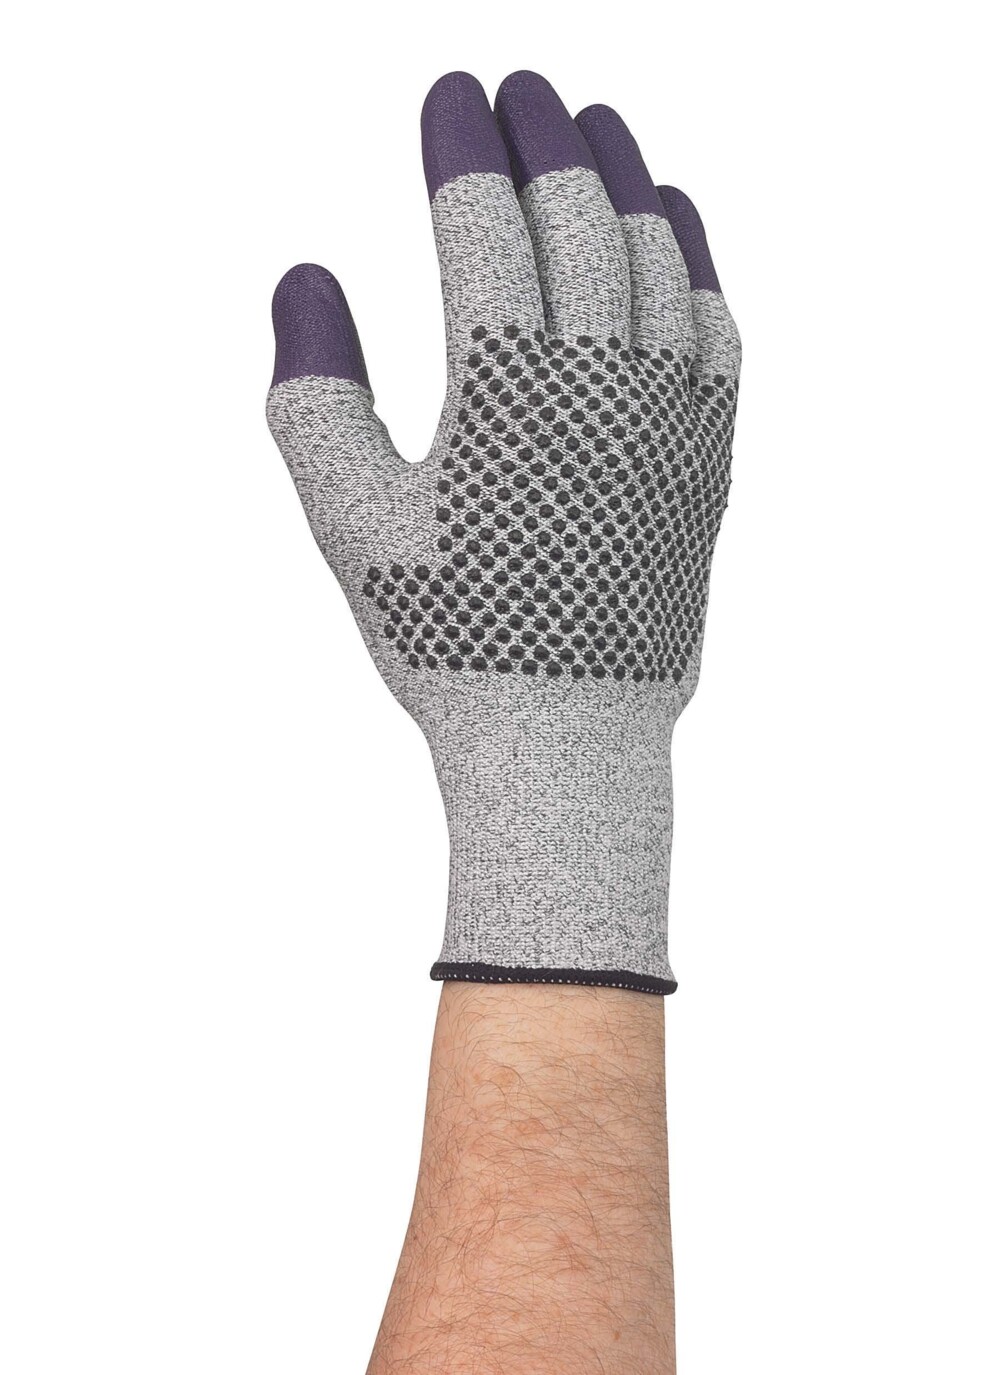 KleenGuard® G60 Endurapro™ Dual Grip Purple Nitrile™ Gloves 97432 Grey & Purple, 9, 1x12 (12 gloves) - 97432